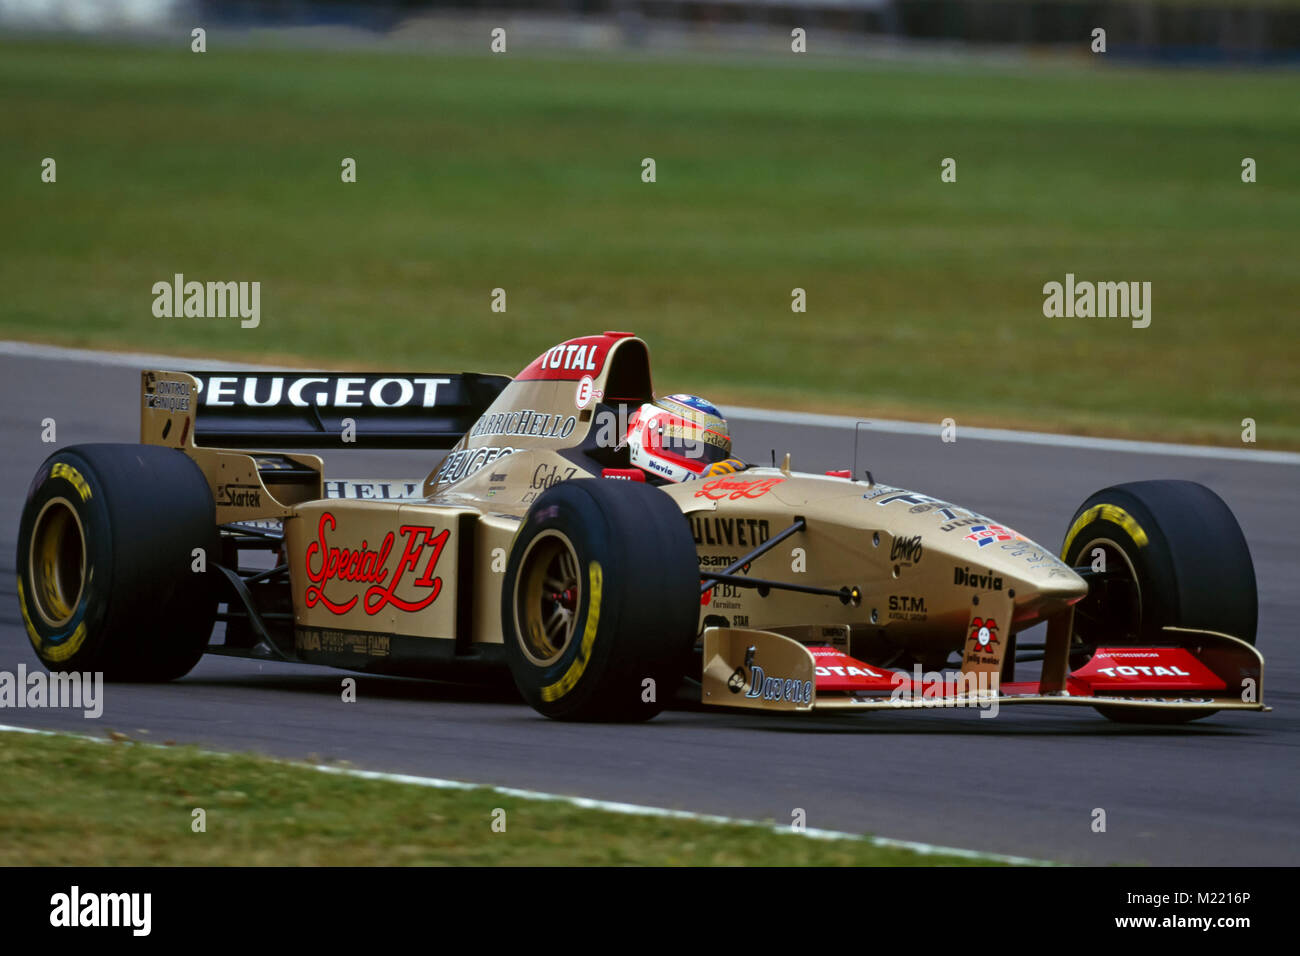 F1,Rubens Barrichello, Jordan Peugeot,England GP 1996,Silverstone Stock  Photo - Alamy